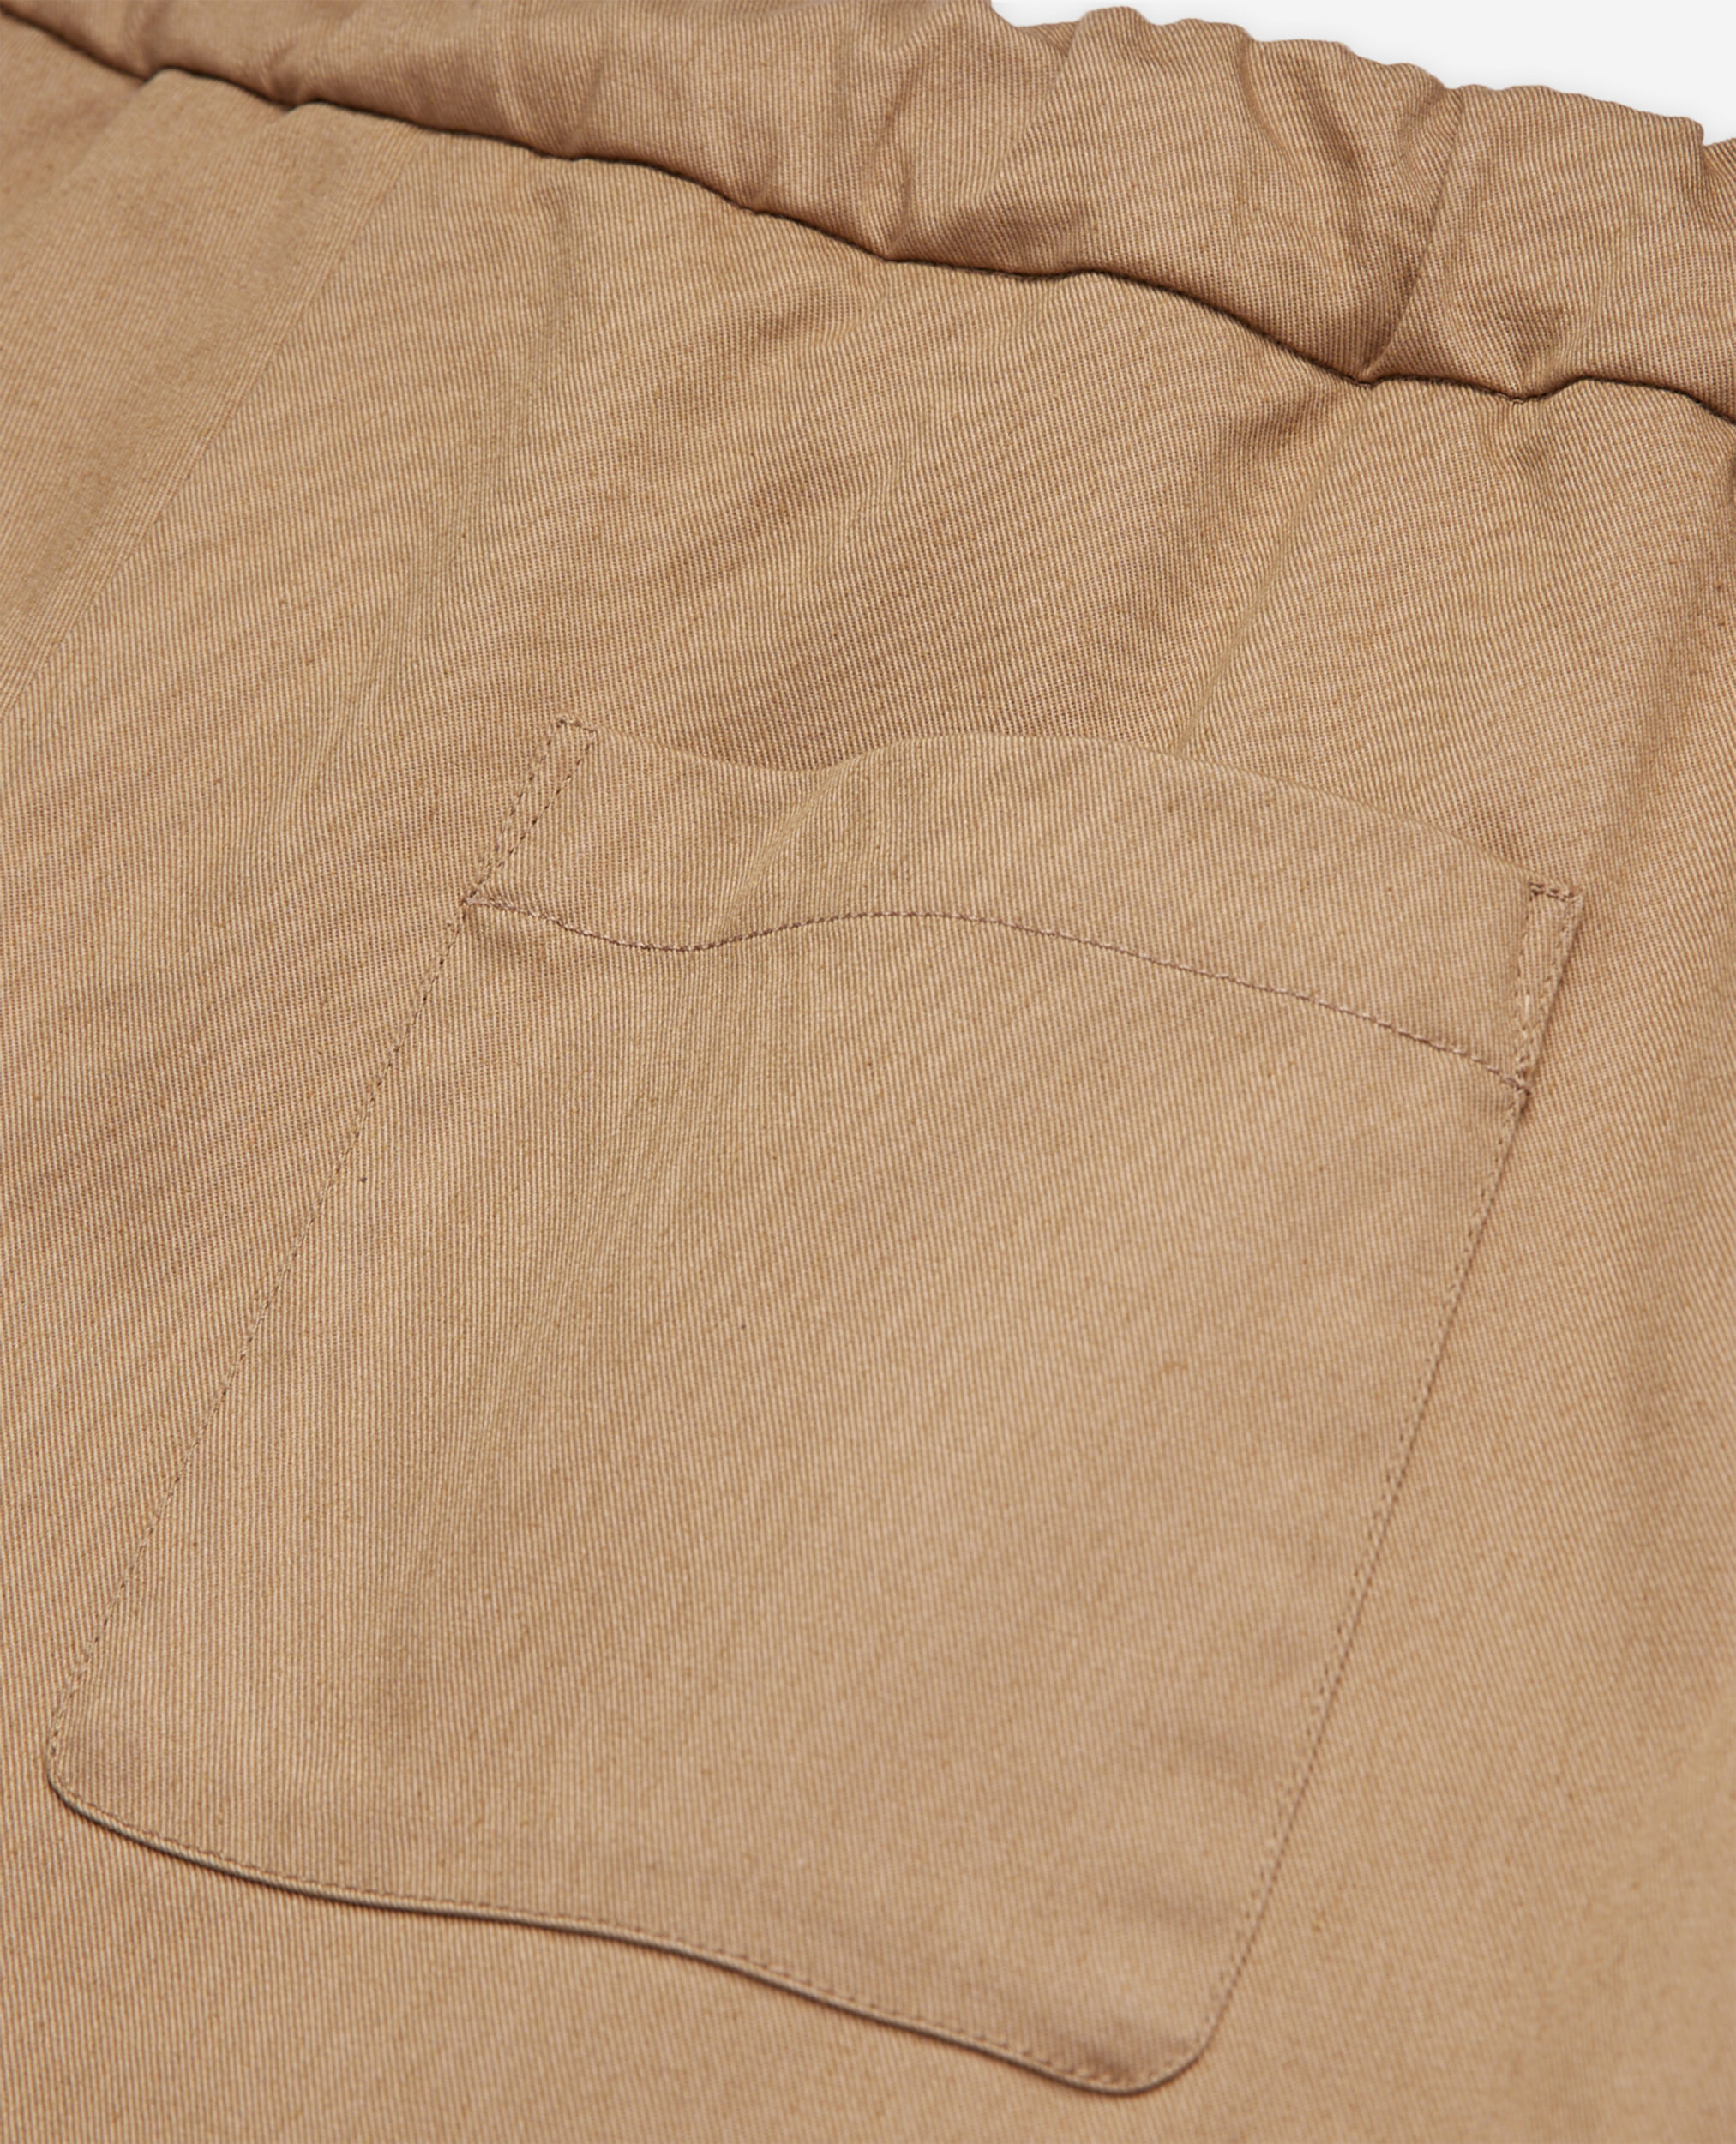 Pantalones cortos beige, BEIGE, hi-res image number null